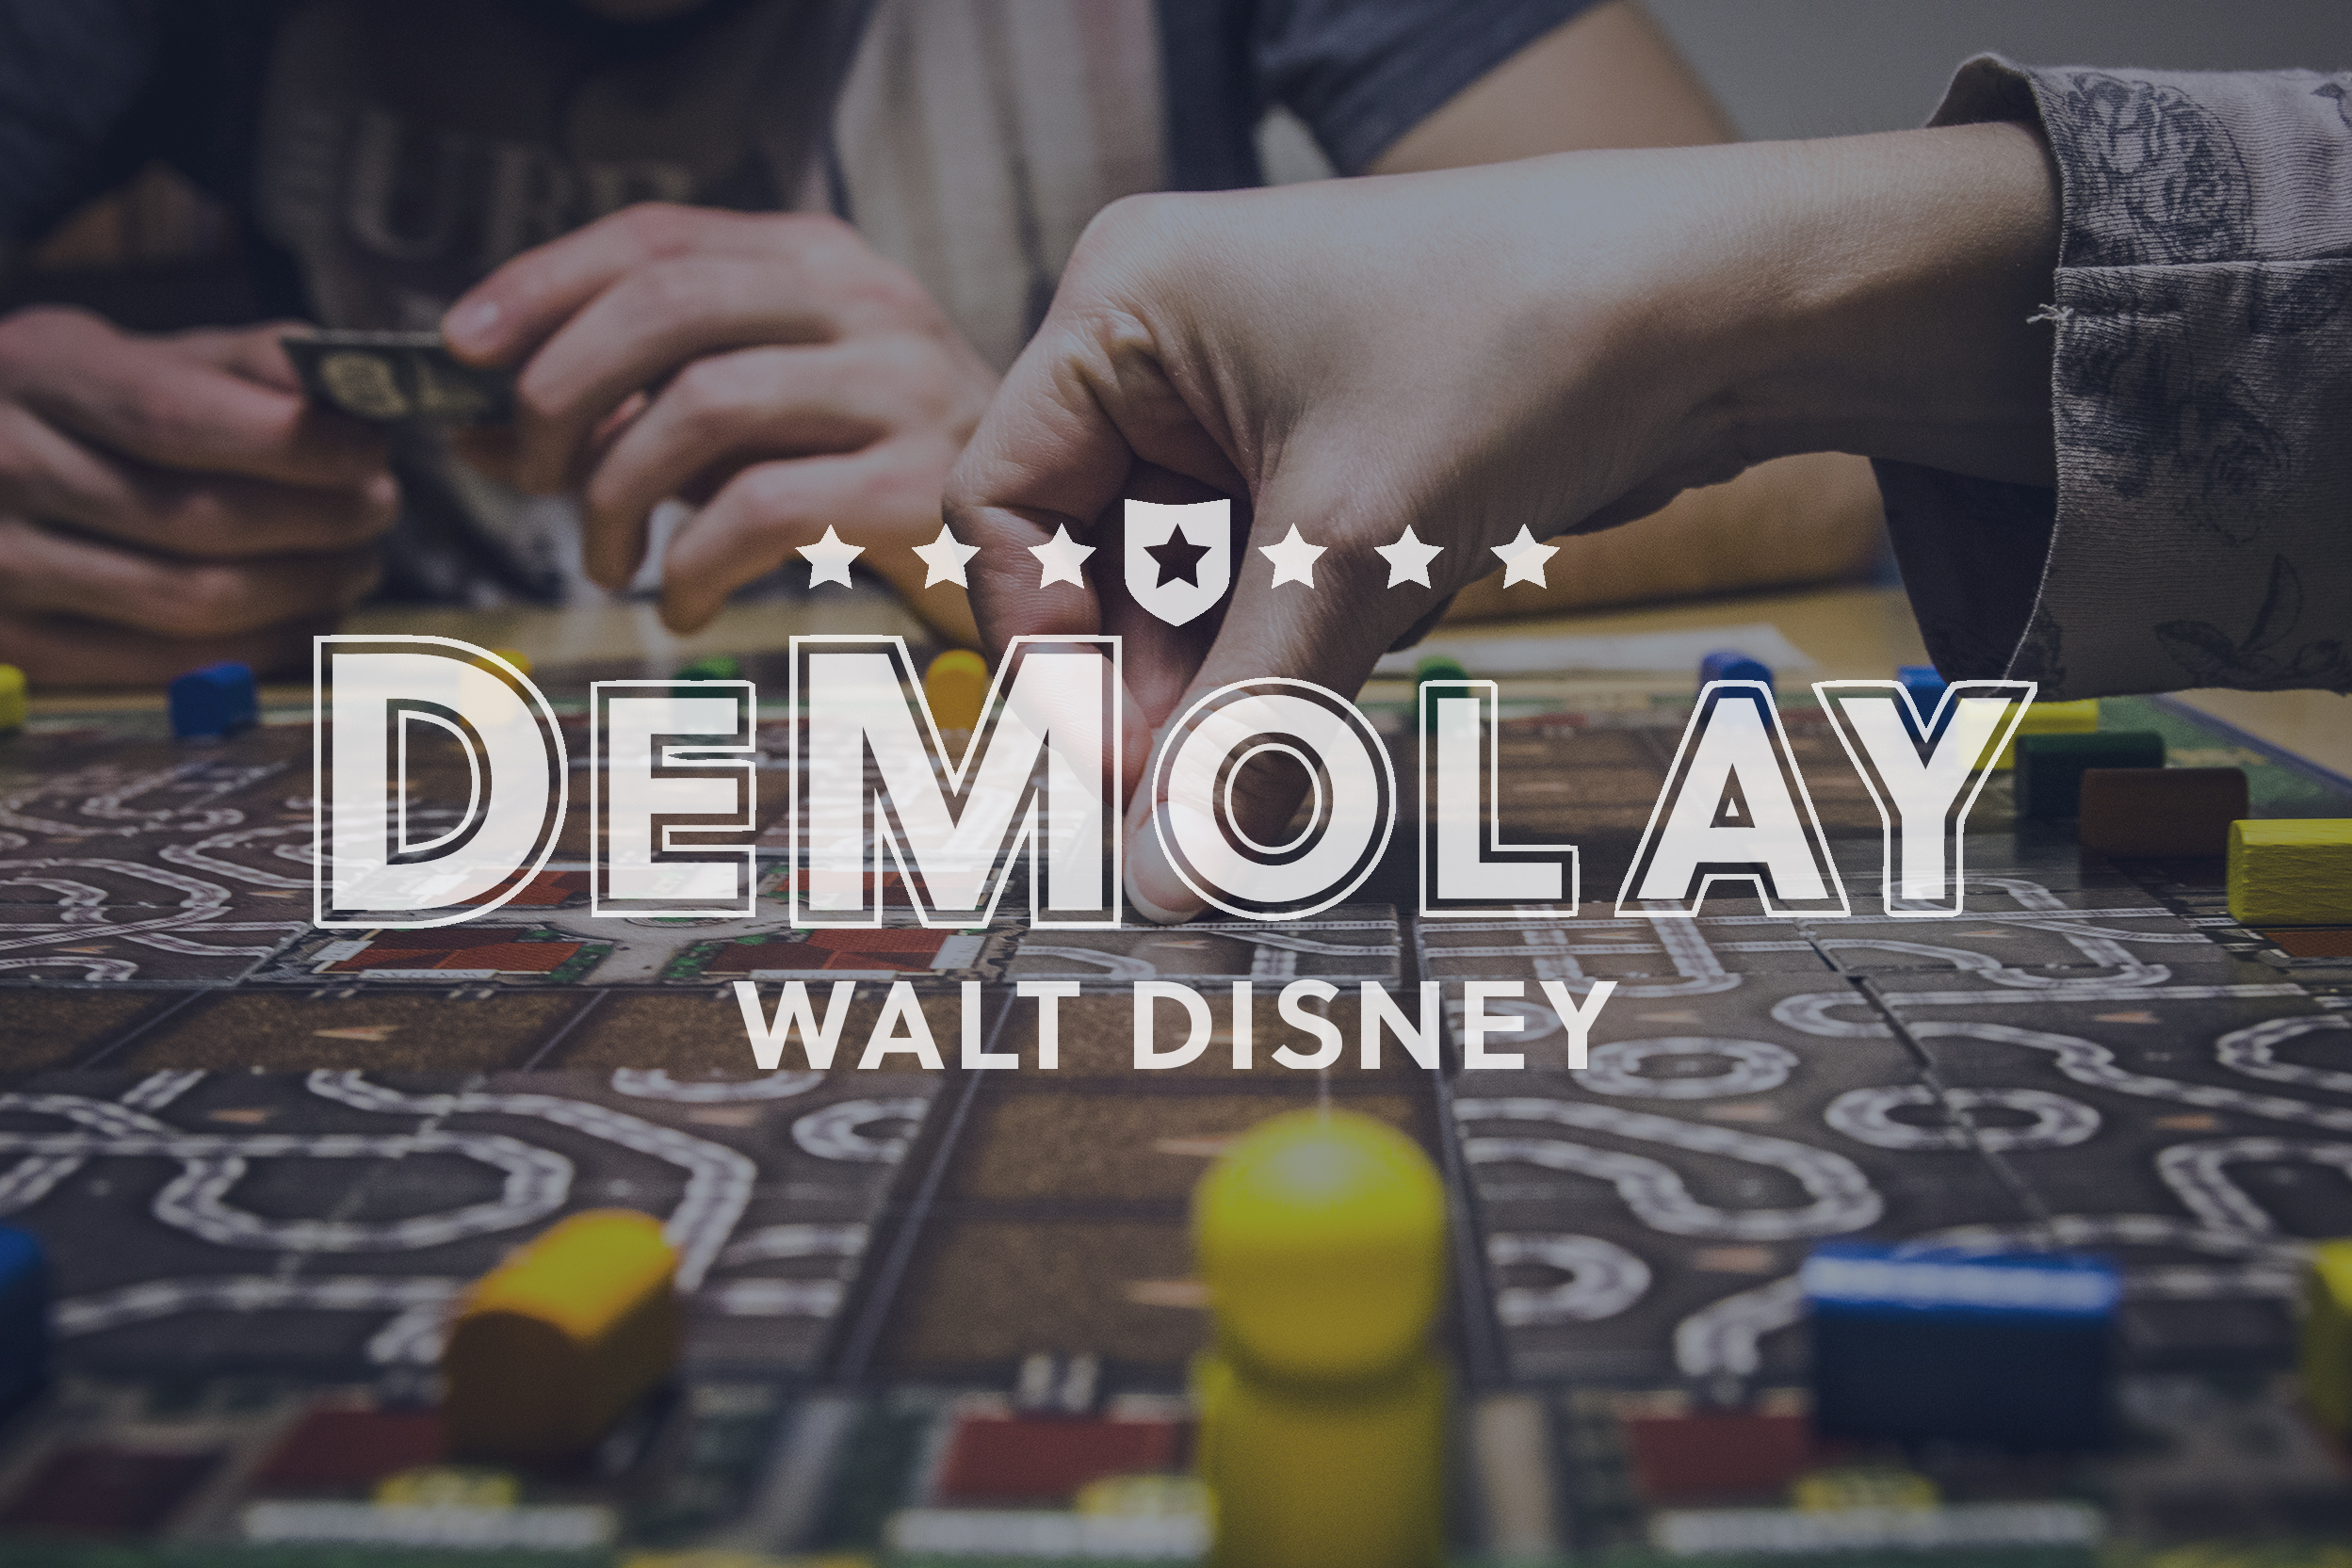 Walt Disney Membership Event  Michigan DeMolay